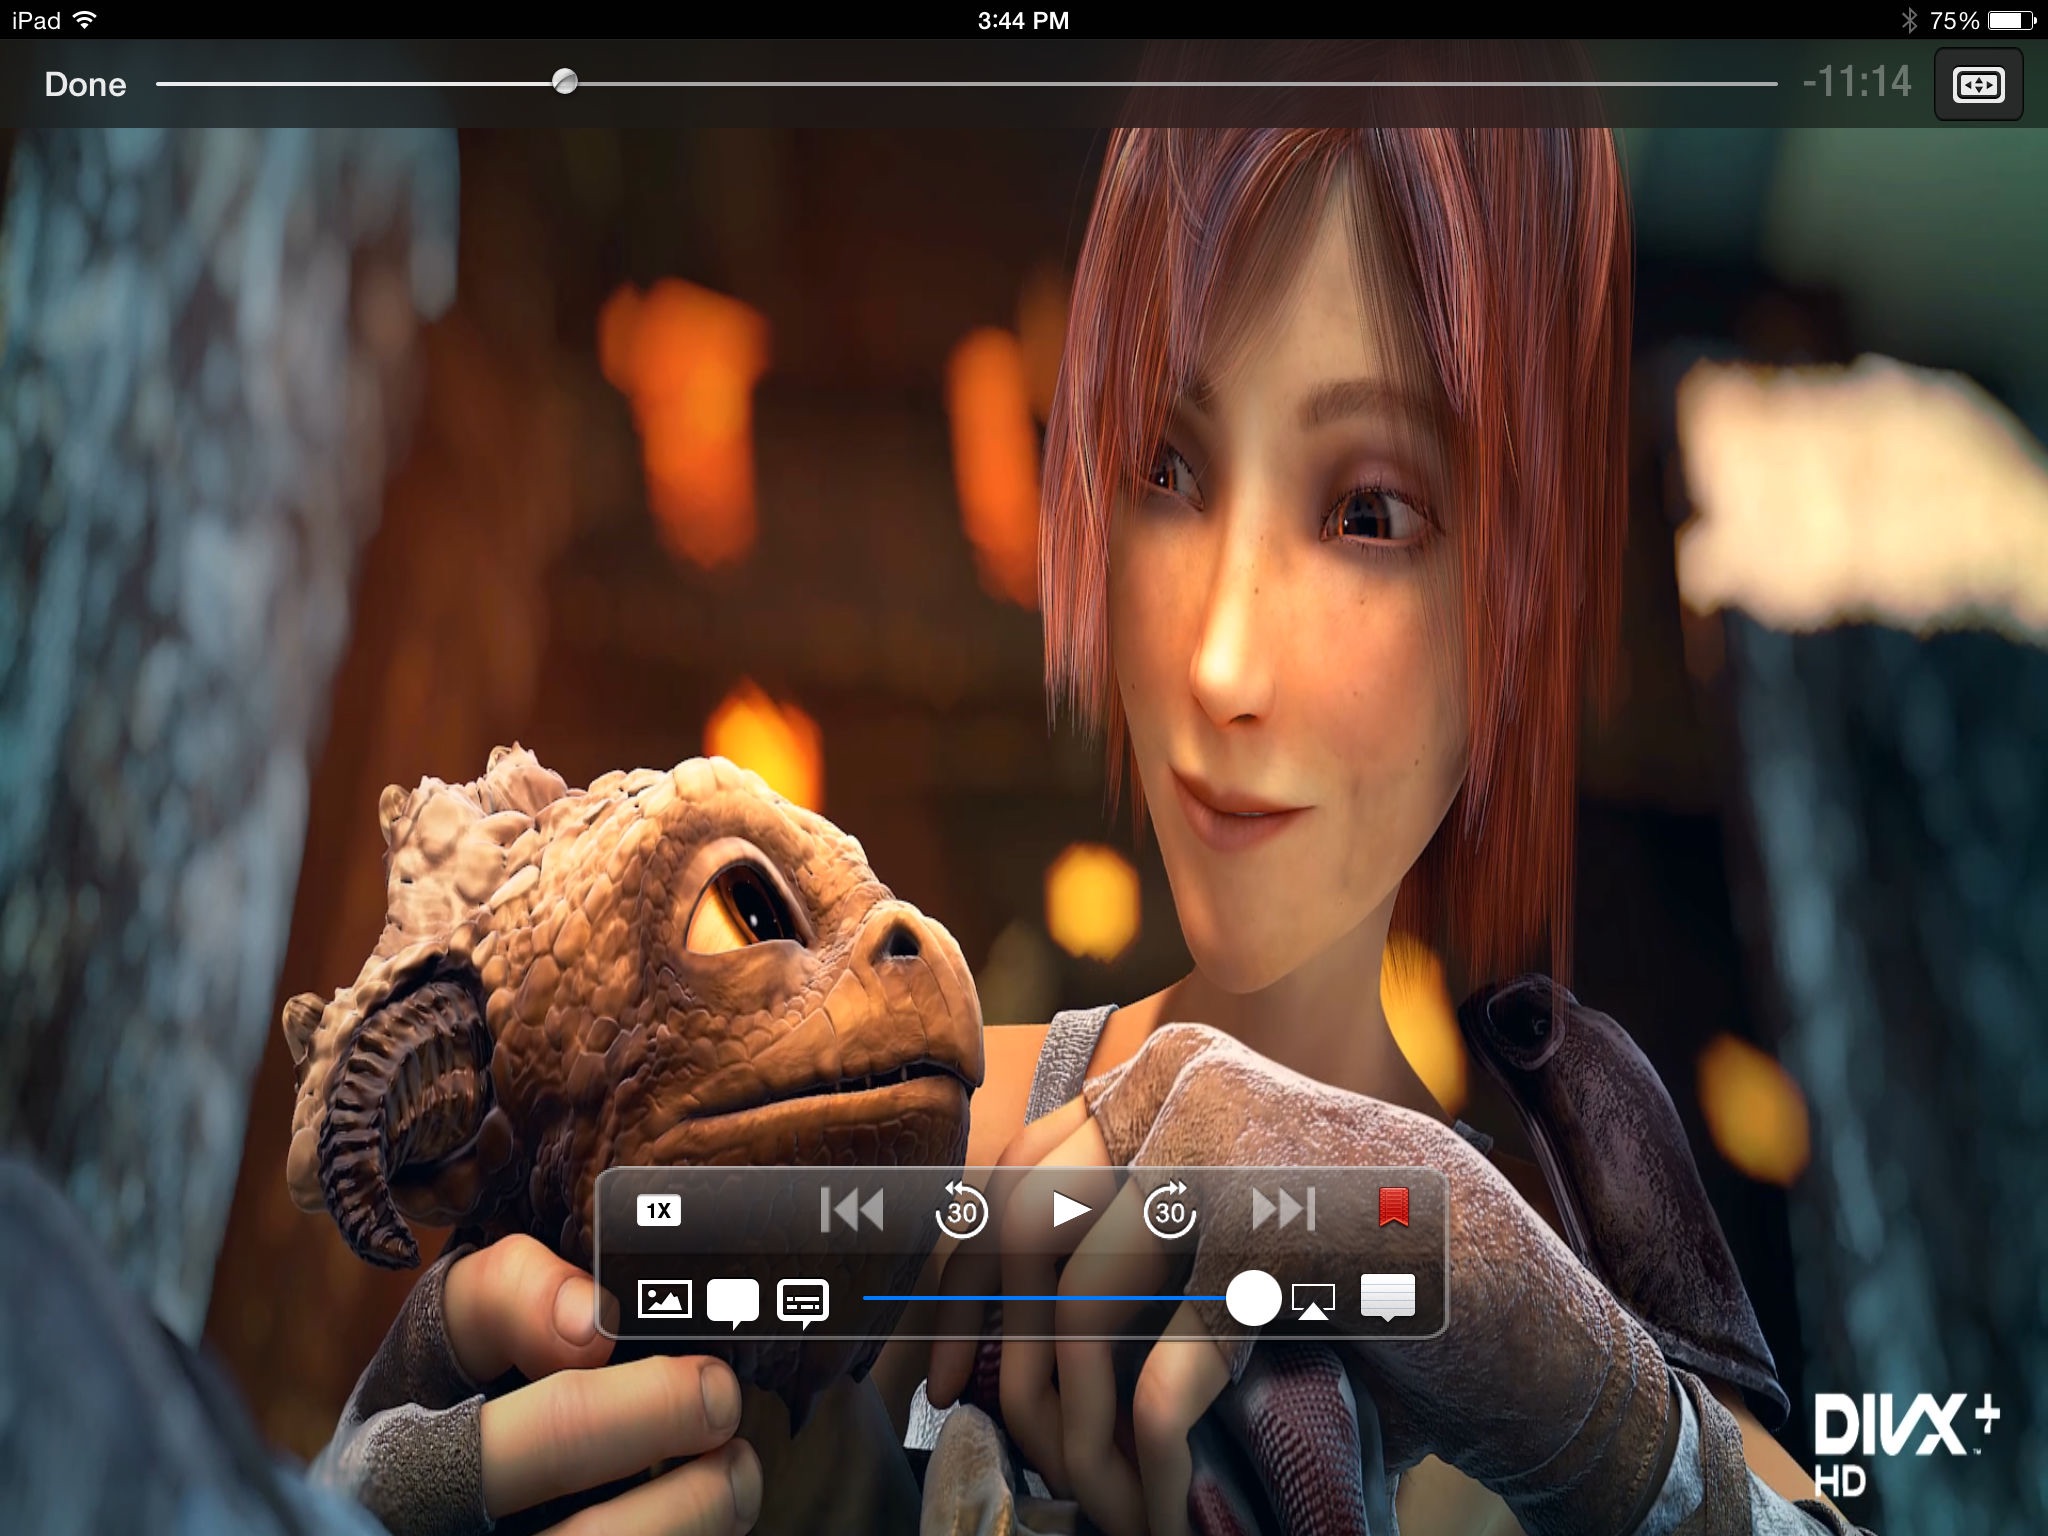 Azul - Video player for iPad screenshot 2